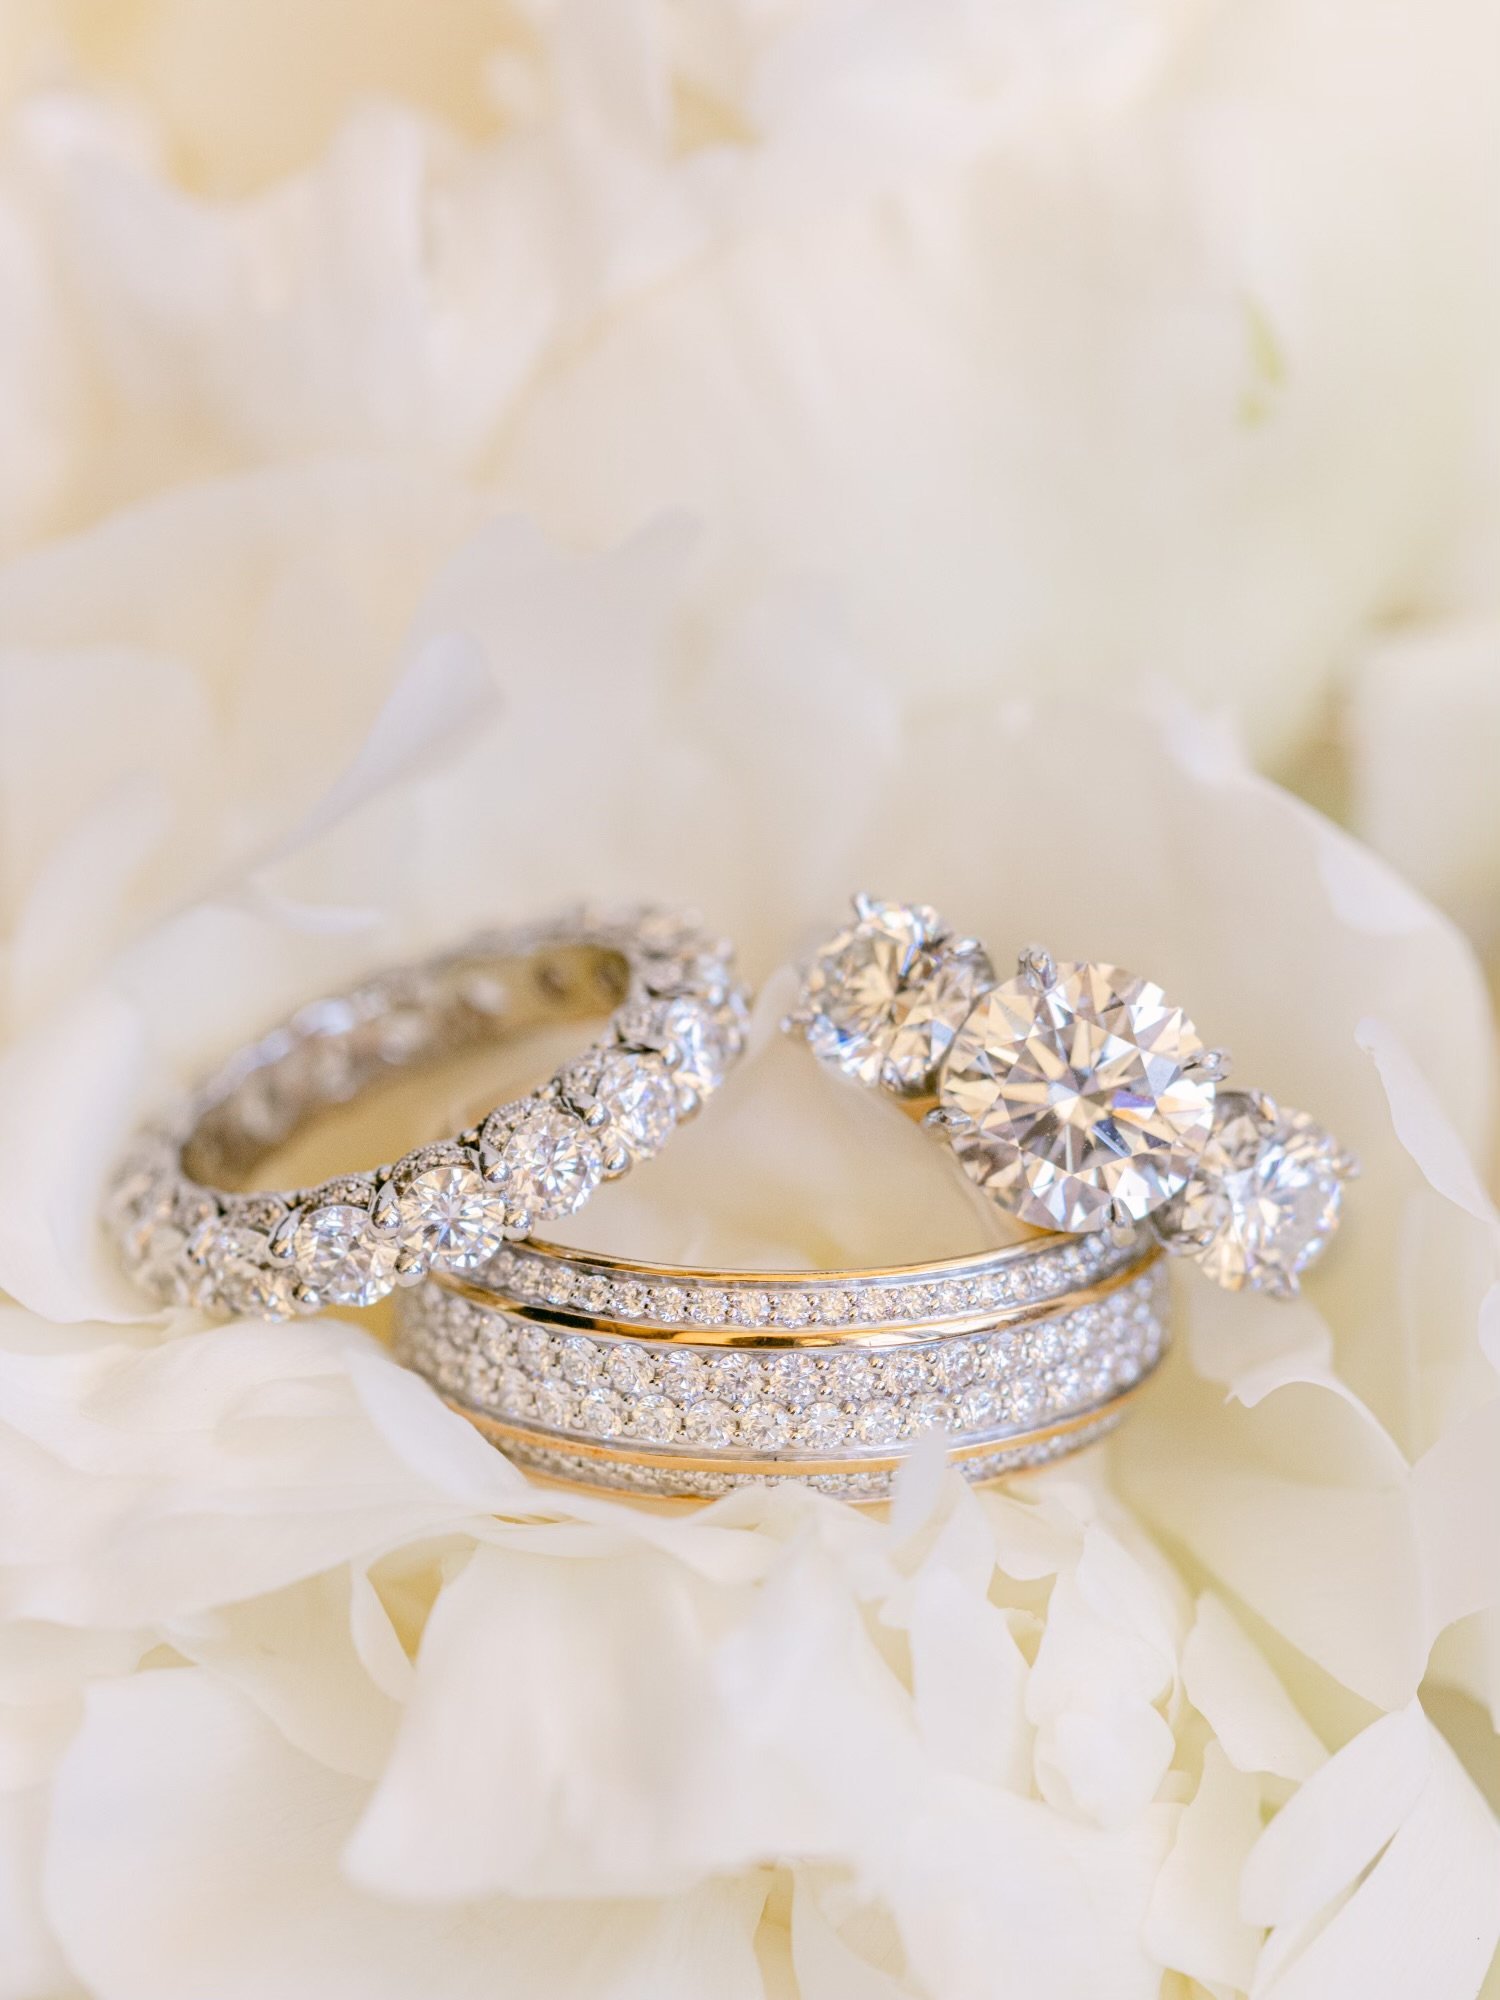 www.santabarbarawedding.com | Paul Von Rieter | Sunstone Villa | Lisa Lafferty | Shawna Yamamoto | Bride and Groom’s Wedding Rings Closeup